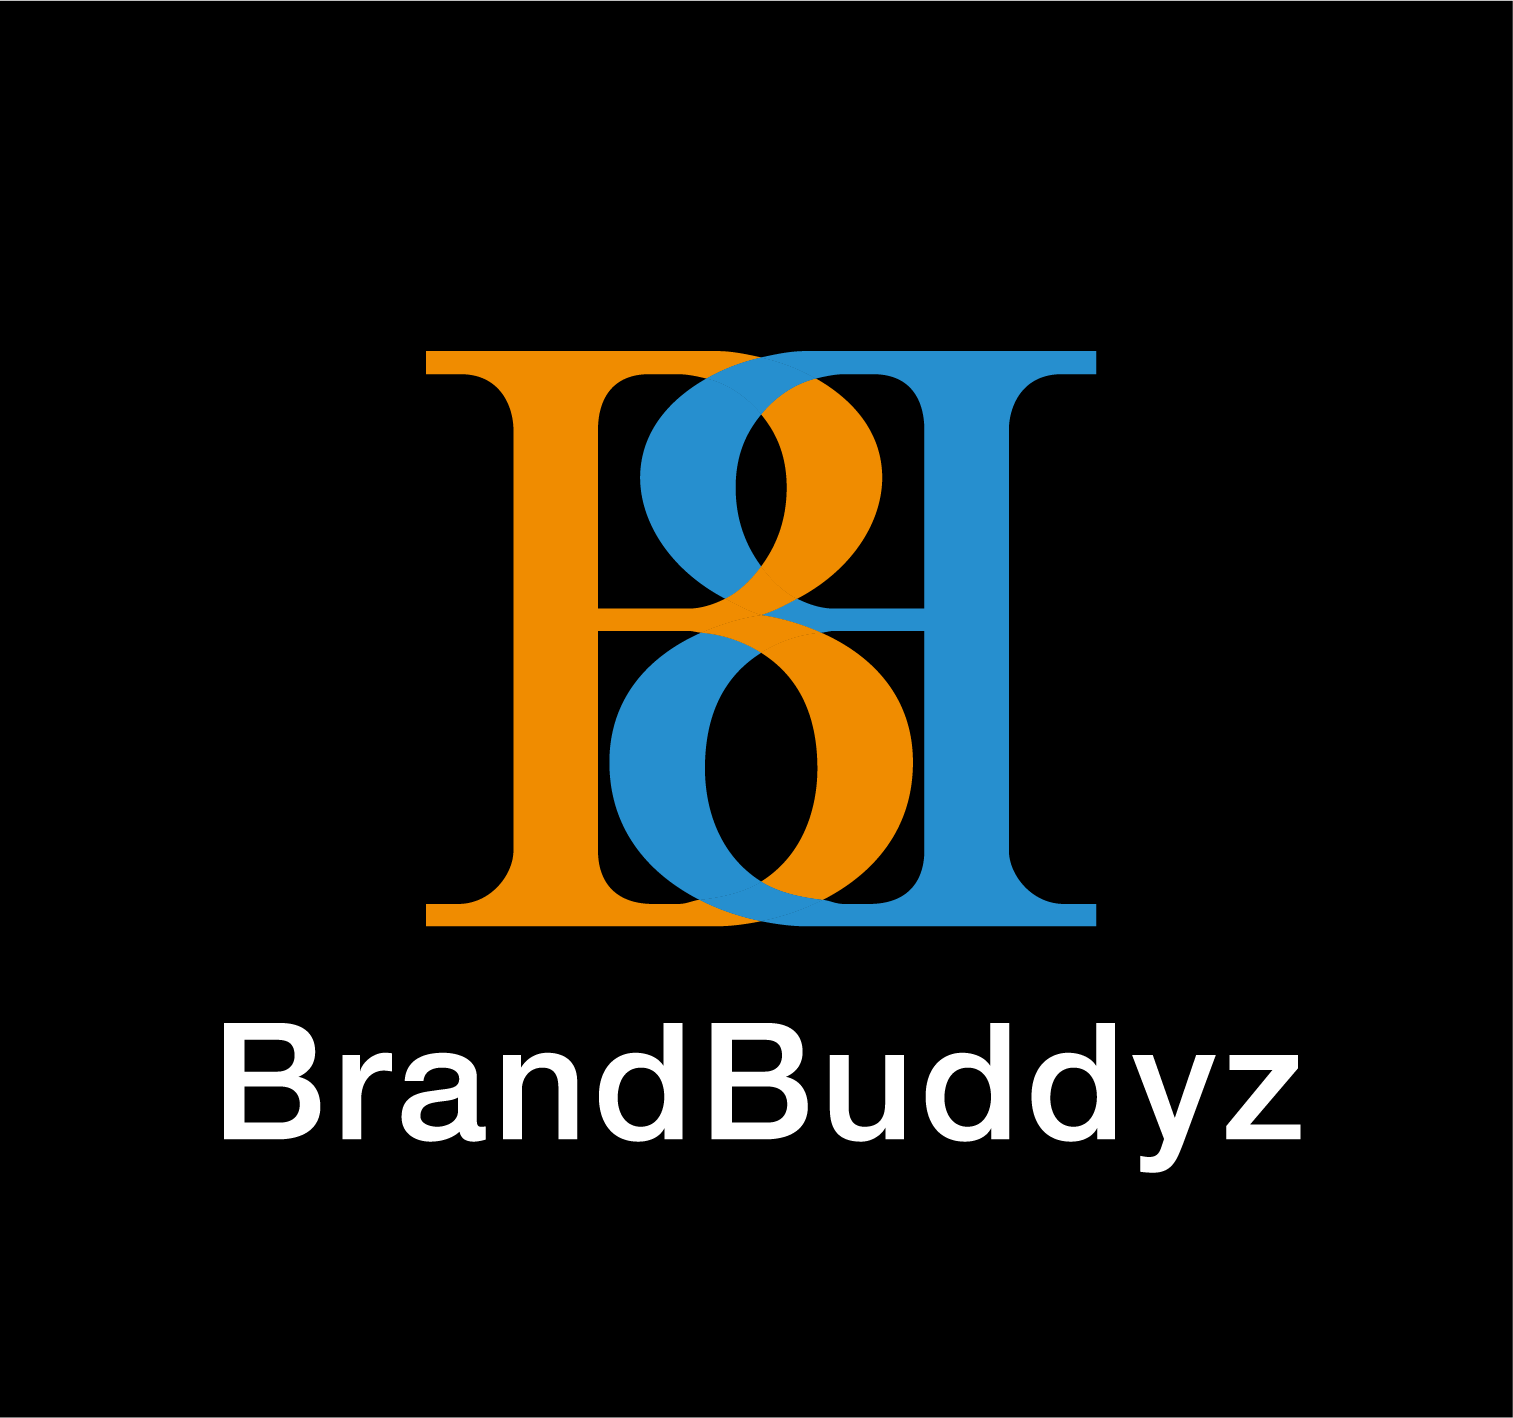 BrandBuddyz合同会社